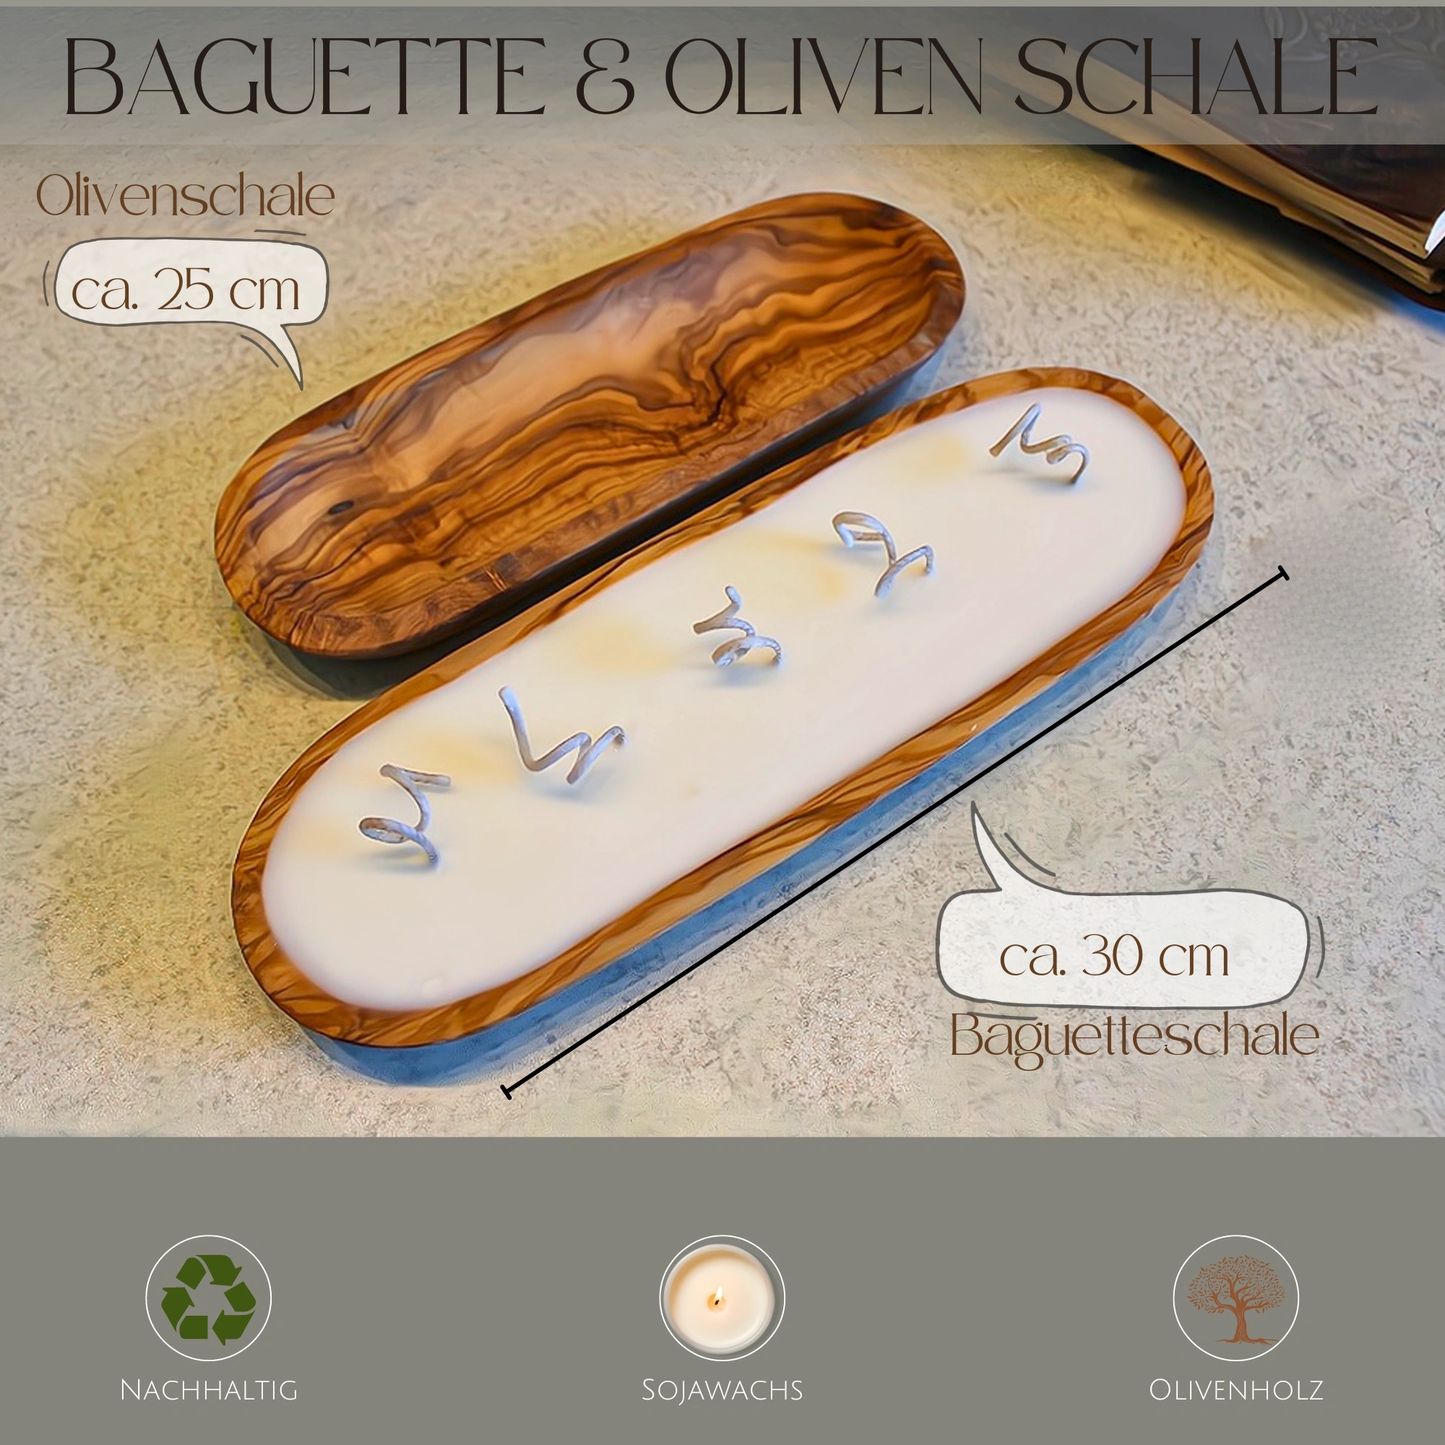 Sojawachskerze in Olivenholzschale "Baguette" 30 cm Vanille